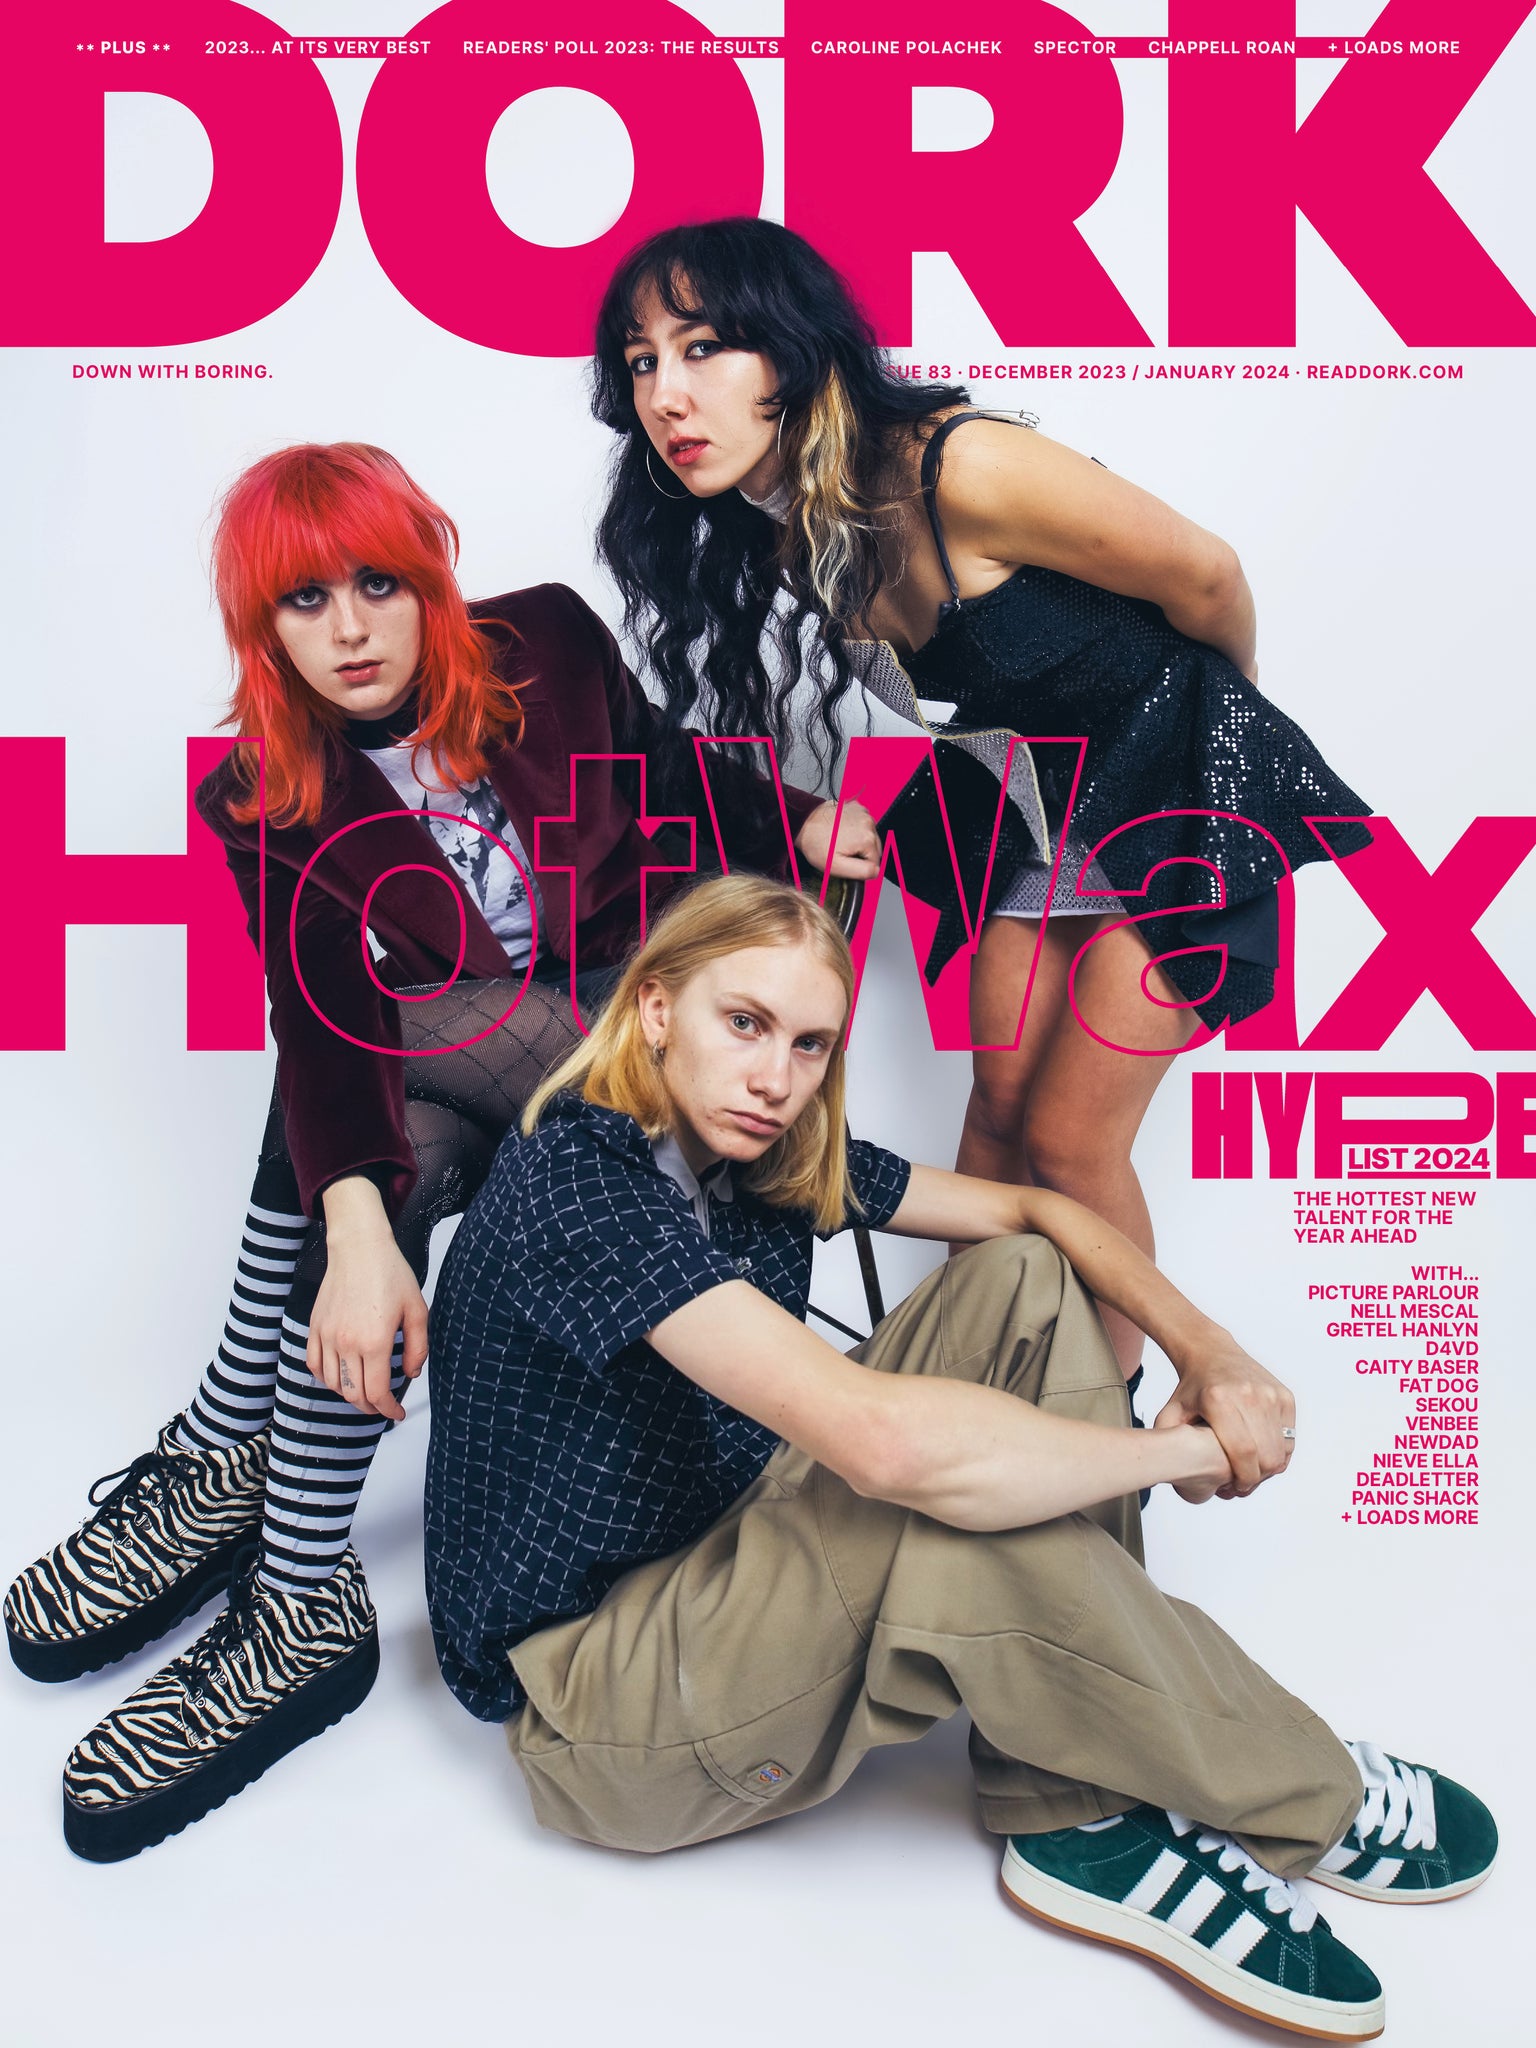 Dork, December 2023 / January 2024 (HotWax cover)